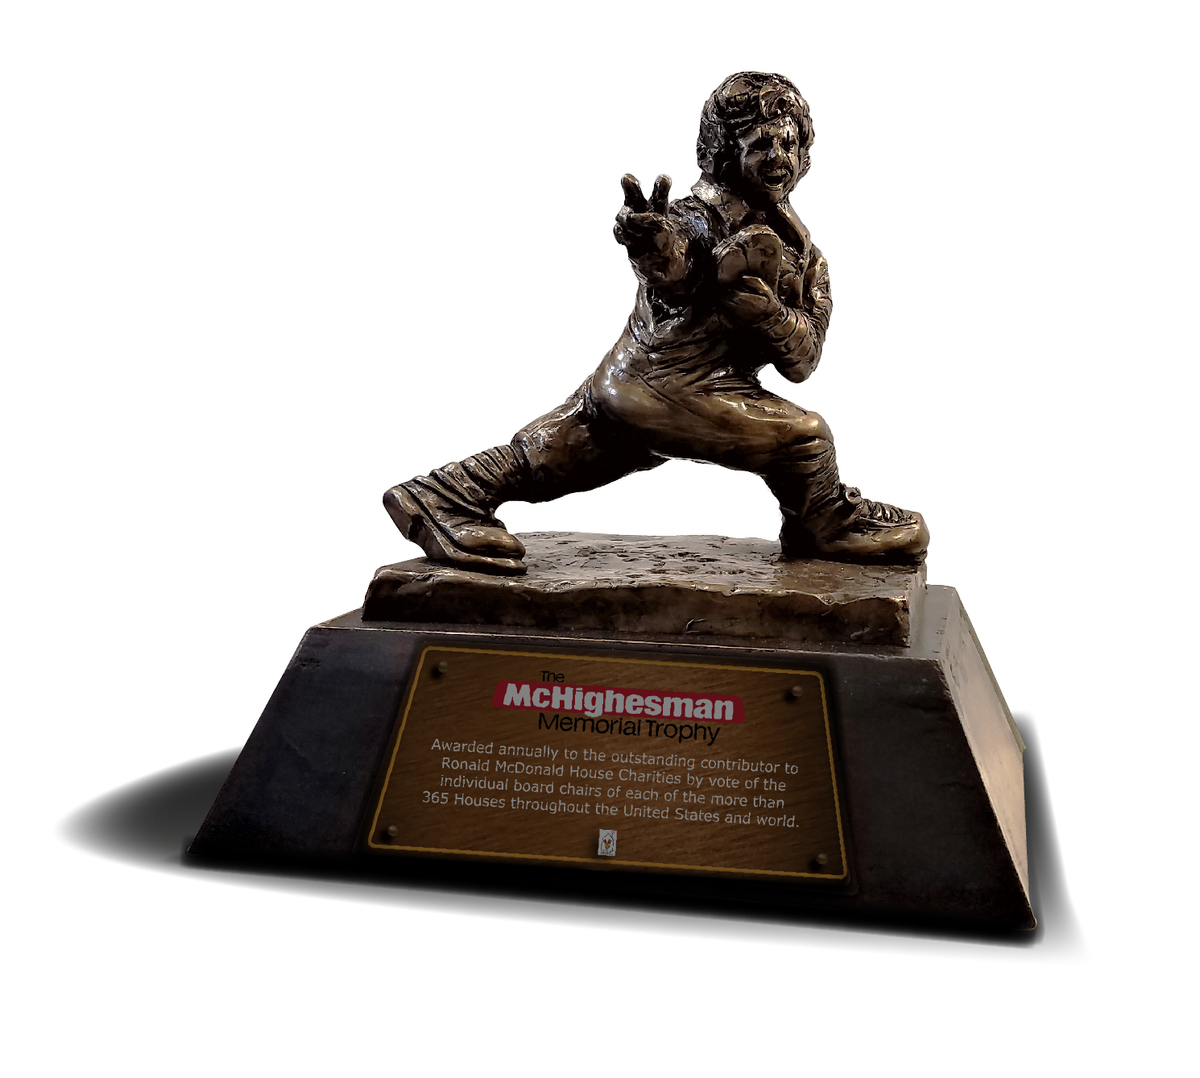 The McHighesman Memorial Trophy